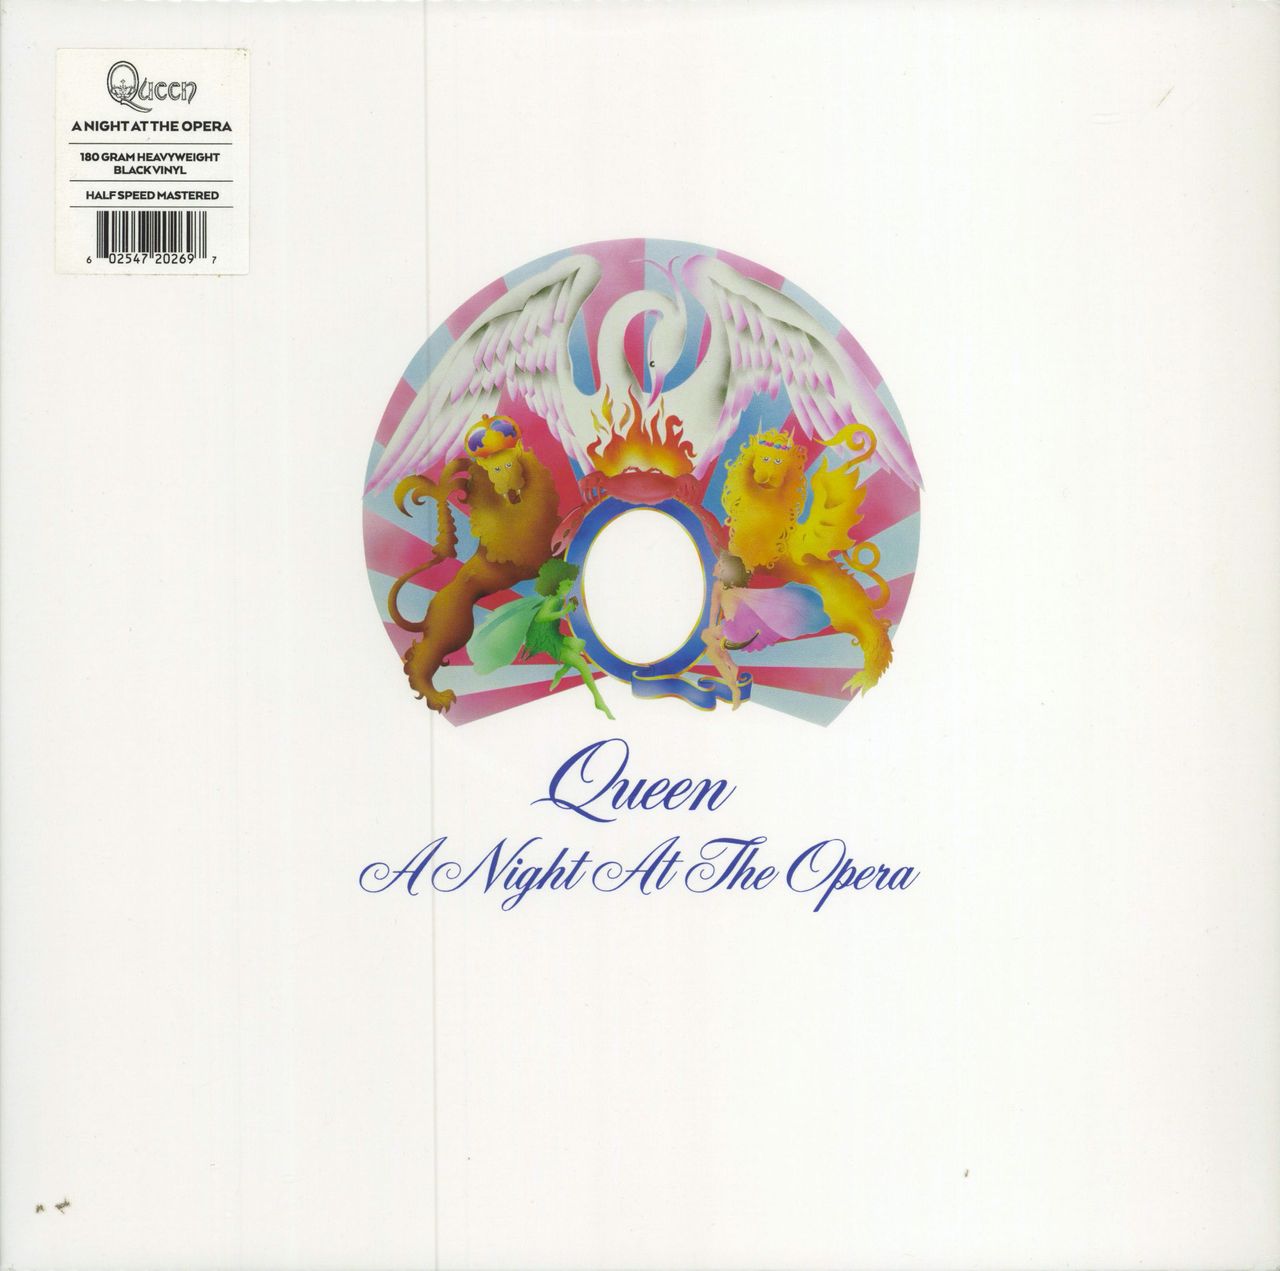 Queen A Night At The Opera - 180 Gram Half Speed Mastered - Sealed UK vinyl LP album (LP record) 00602547202697